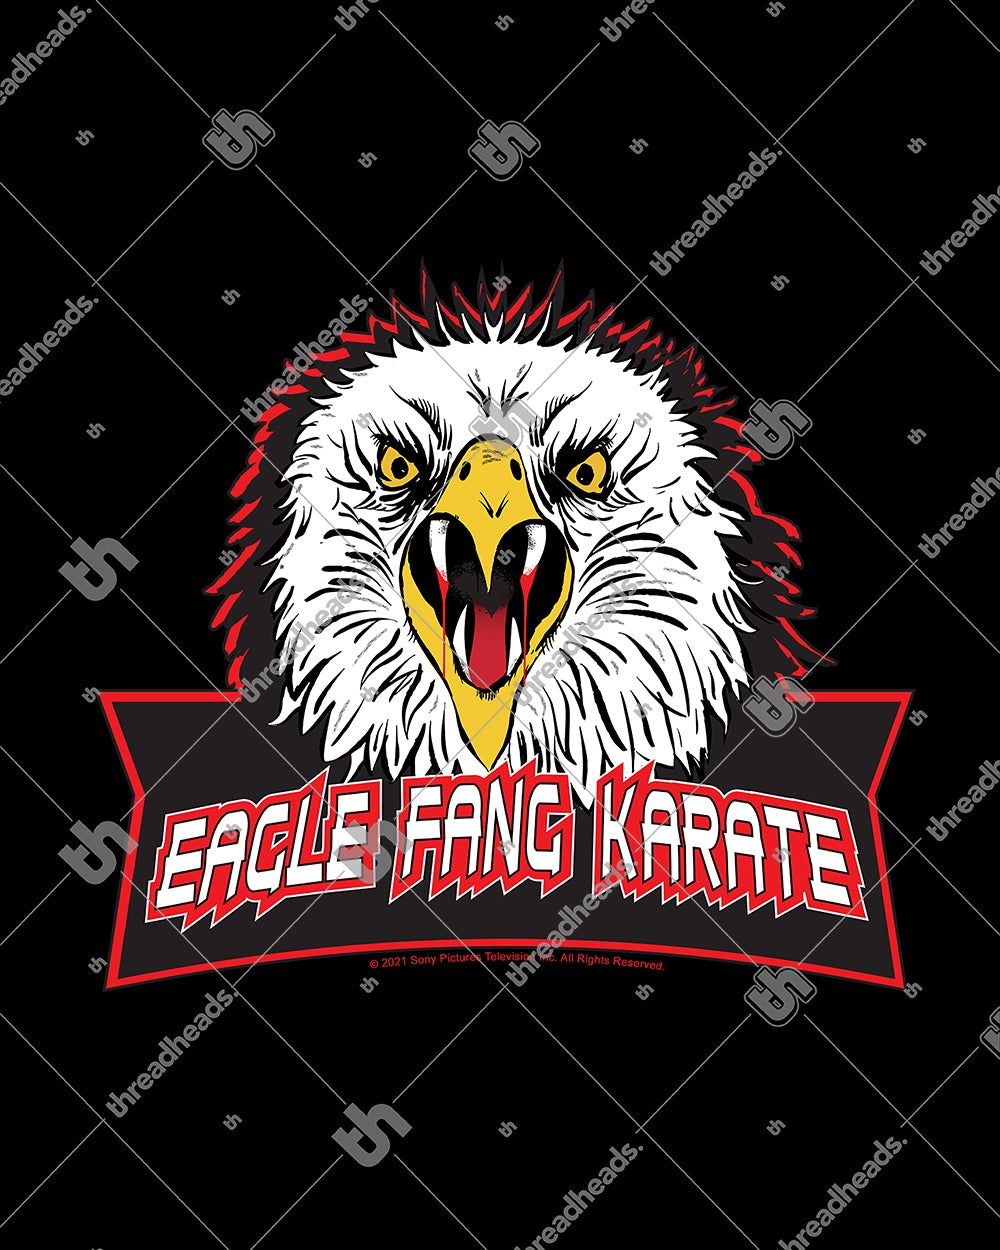 Eagle Fang Karate Logo Tank Australia Online #colour_black